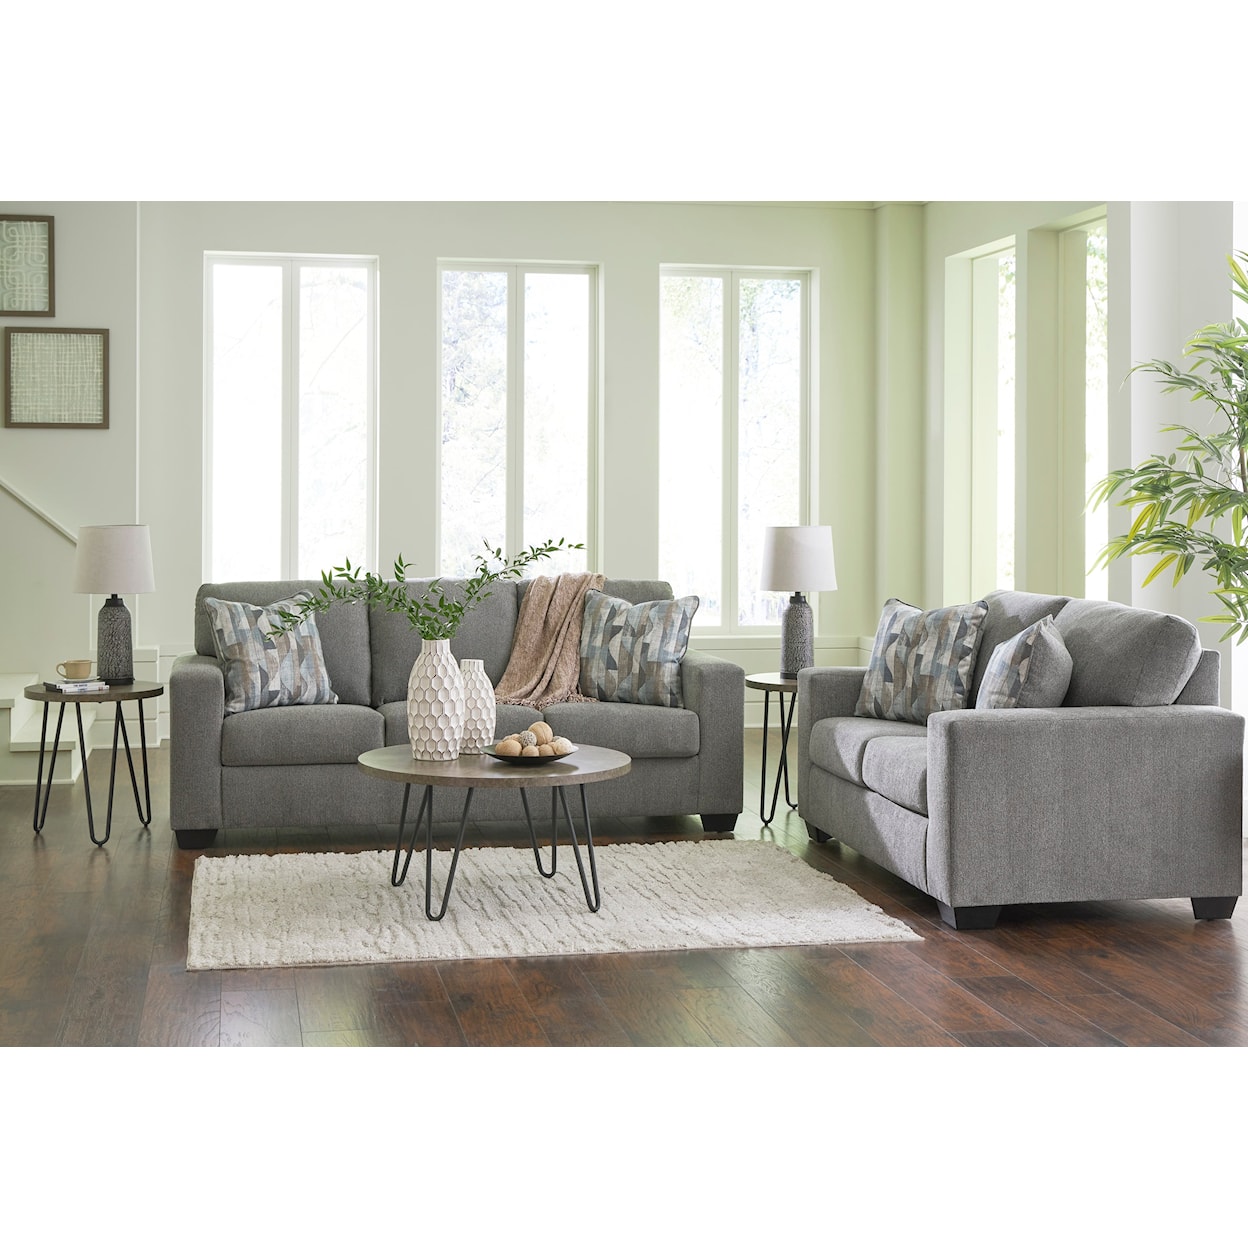 Ashley Furniture Signature Design Deltona 2-Piece Living Room Set